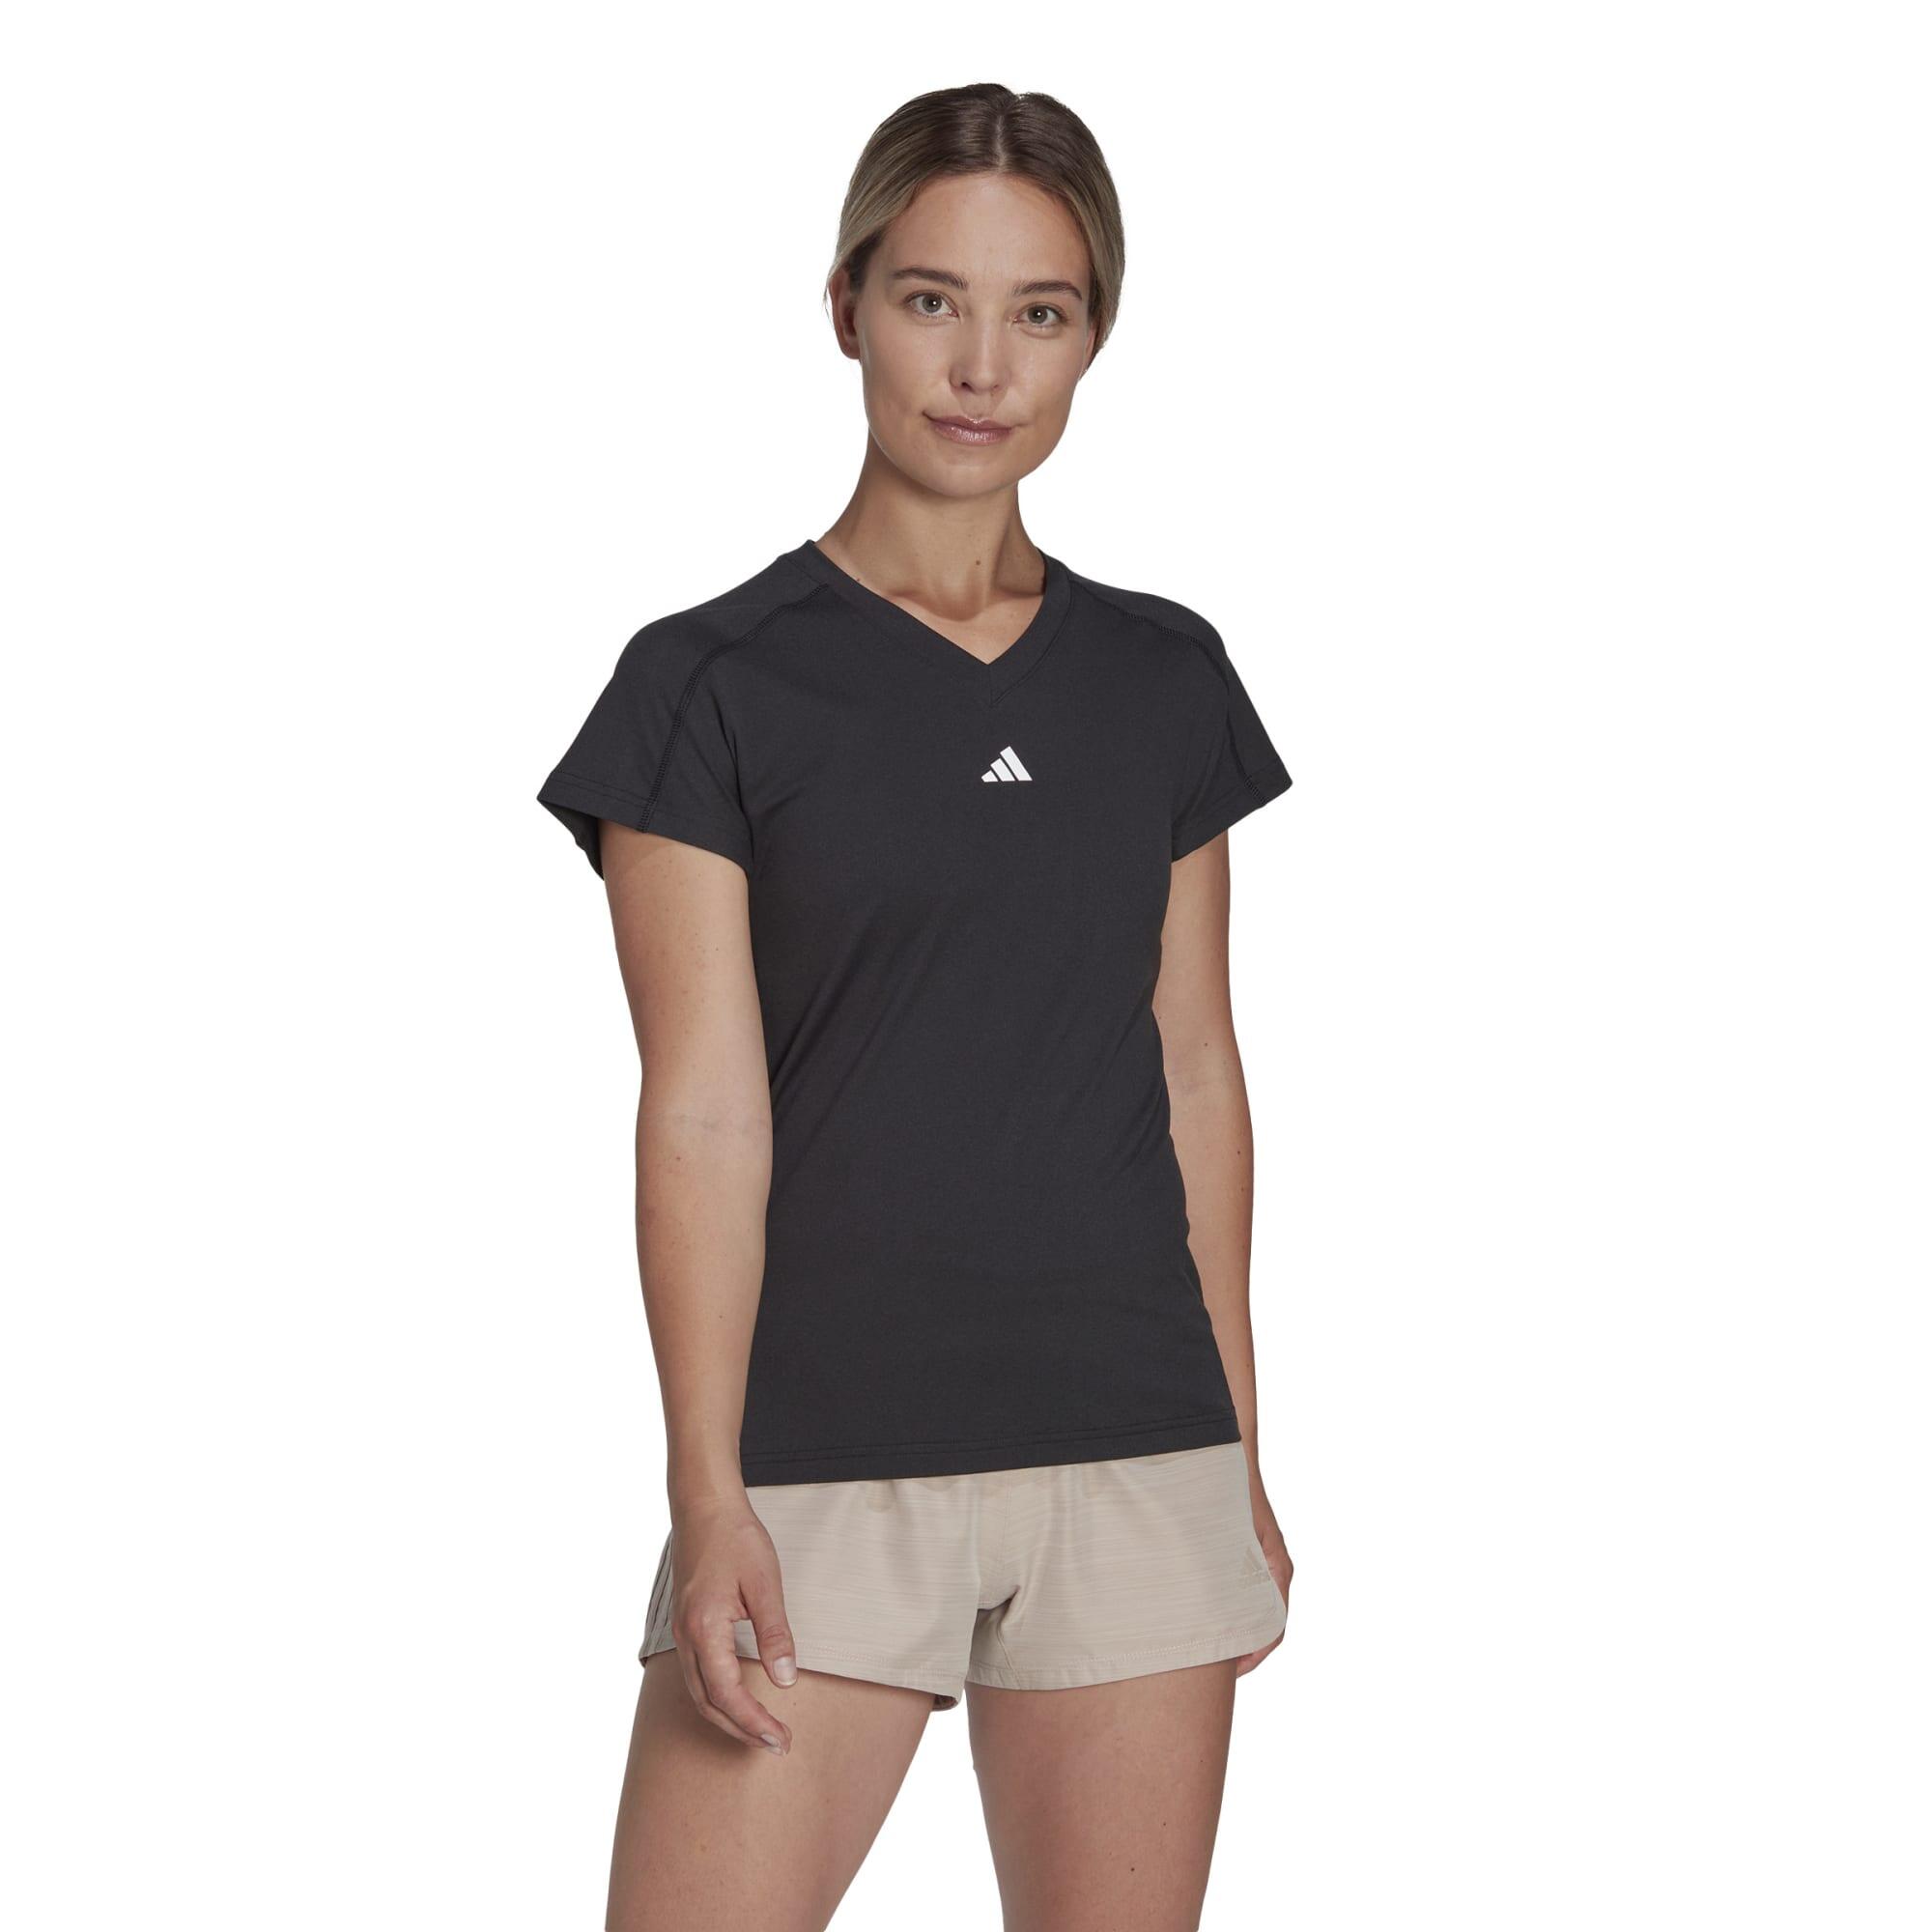 ADIDAS Women's Cardio Fitness T-Shirt - Black